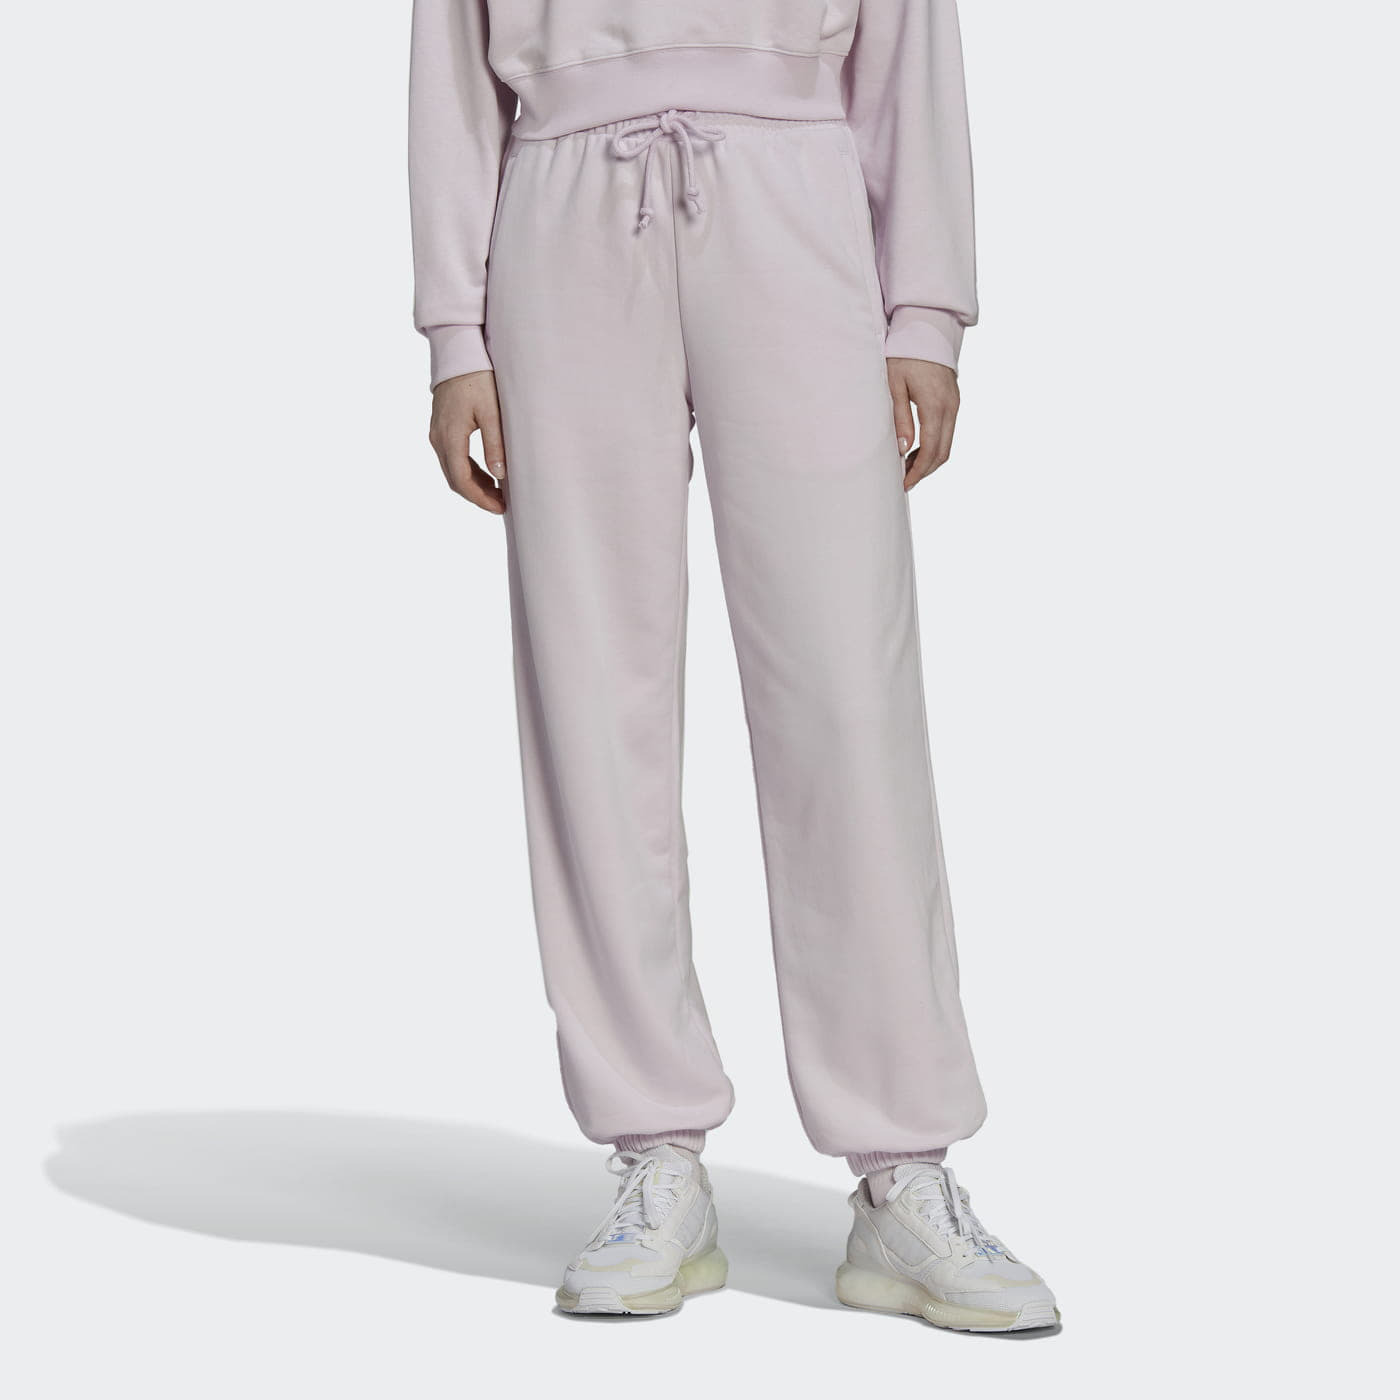 adidas Originals - sweatpants almost pink